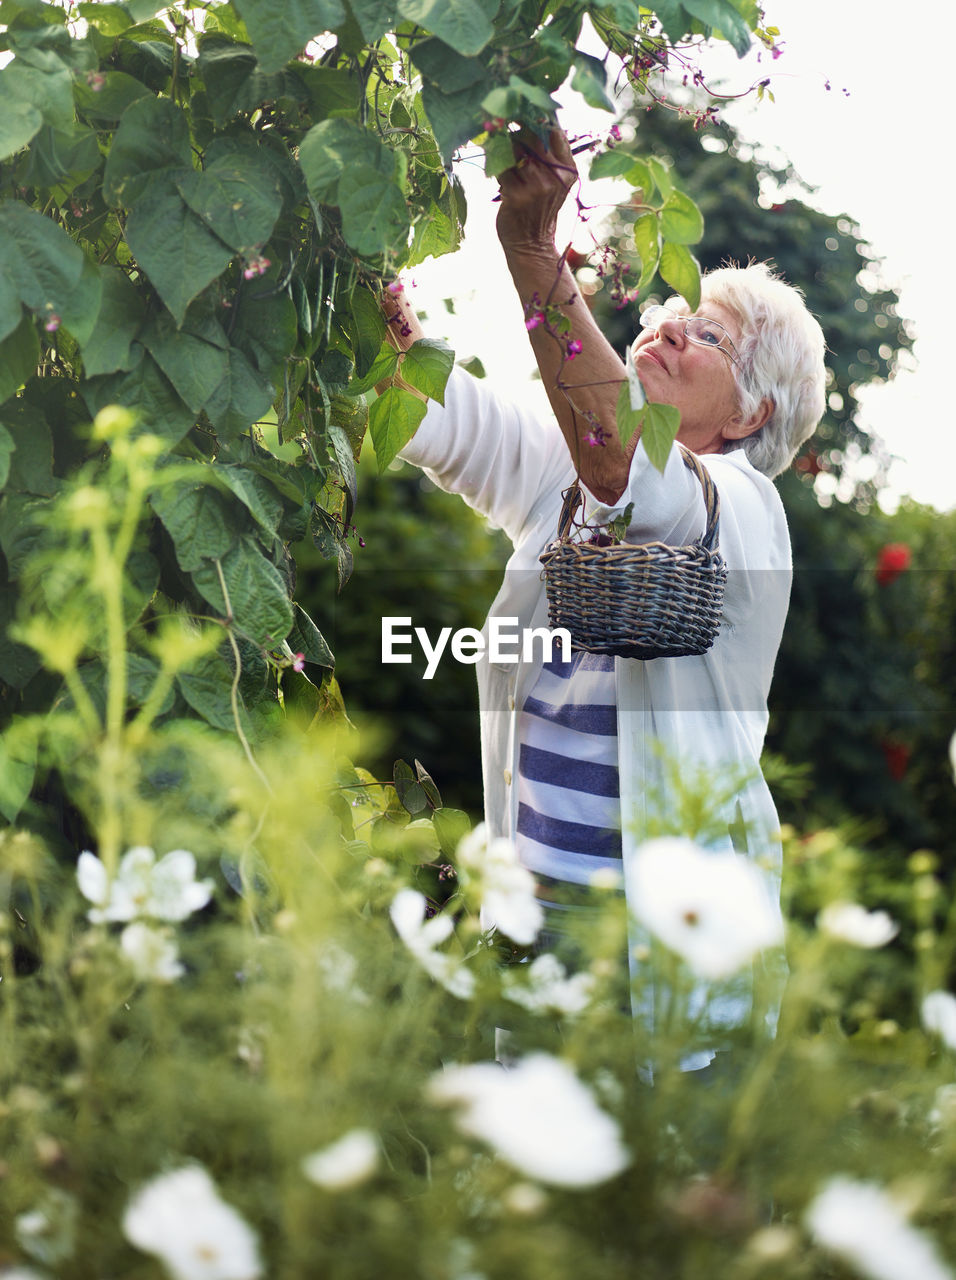 Elderly woman harvesting beans